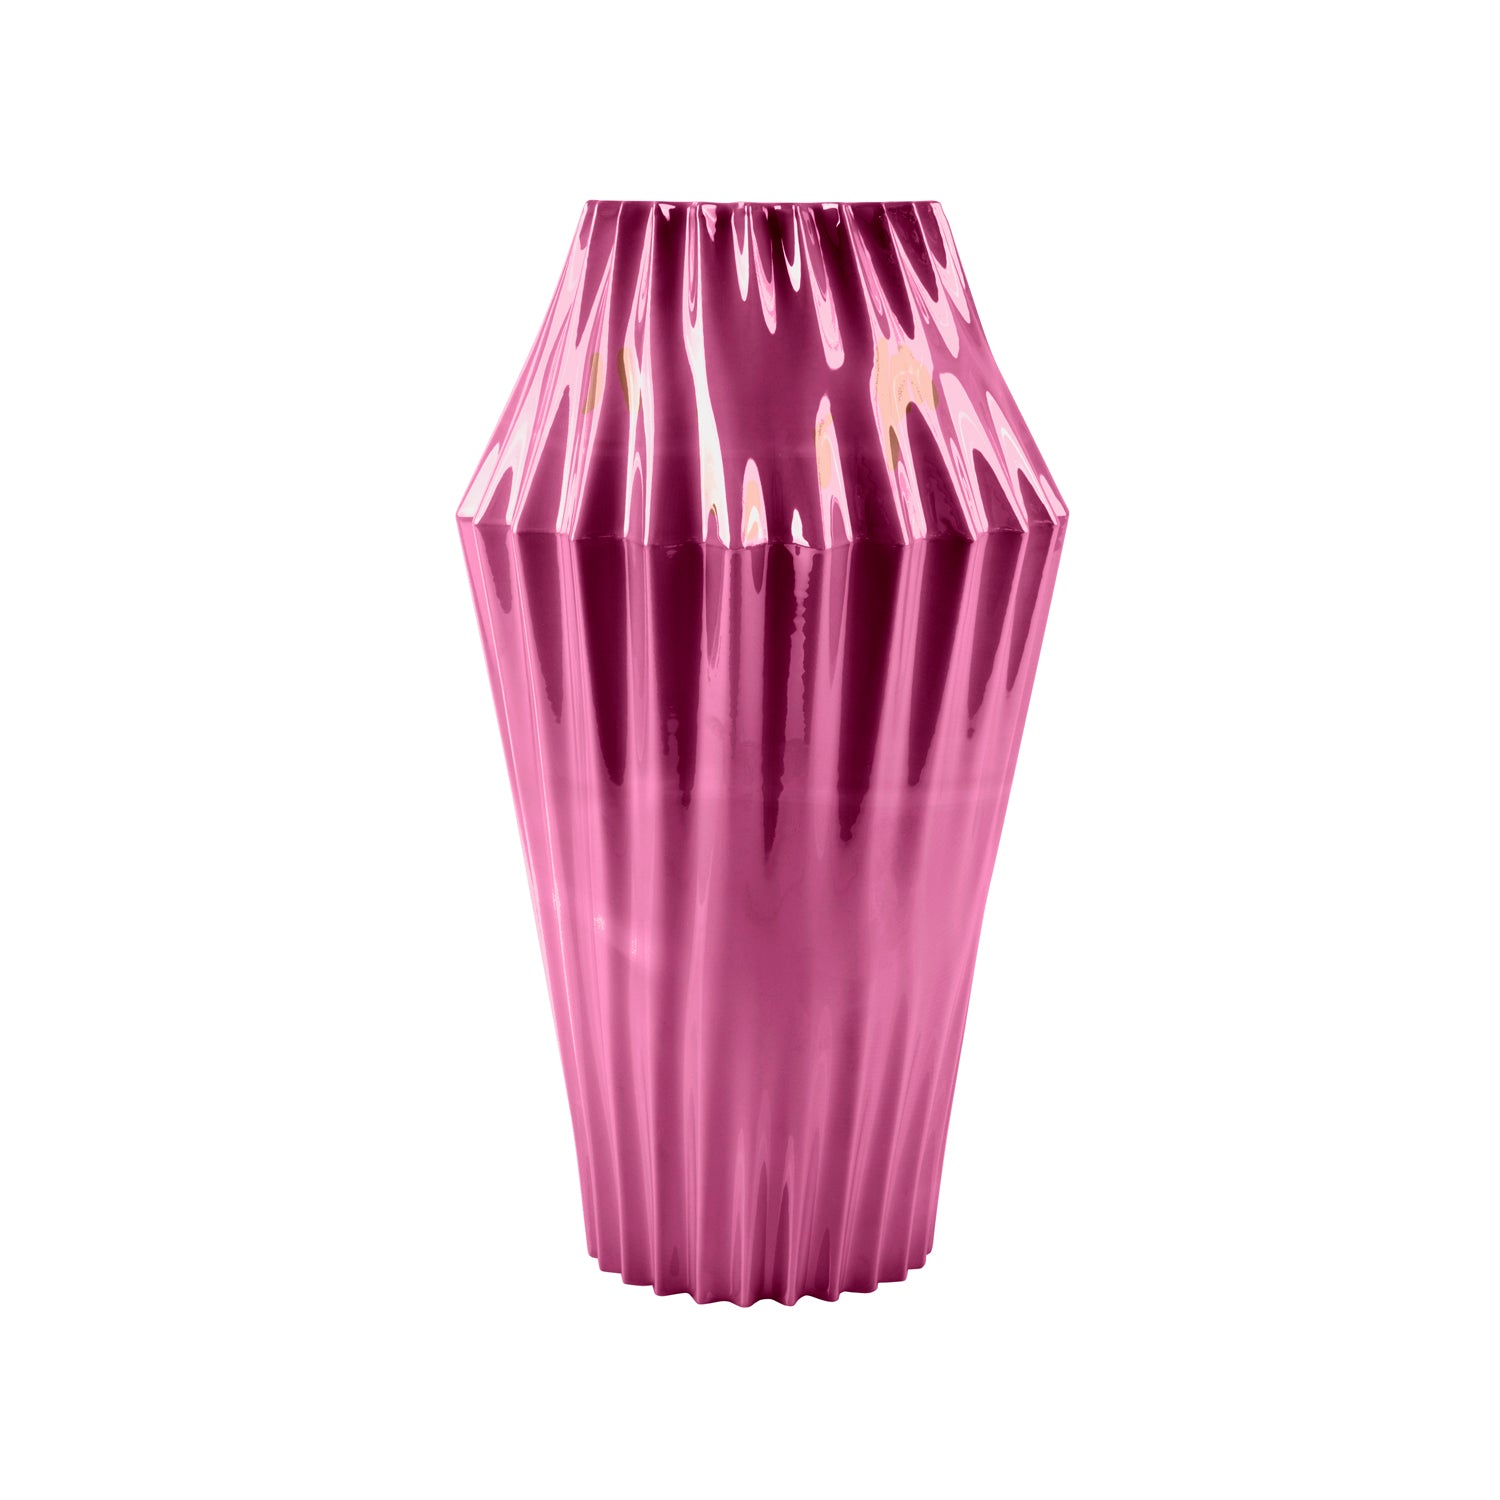 Vertigo Medium Vase - Fuchsia